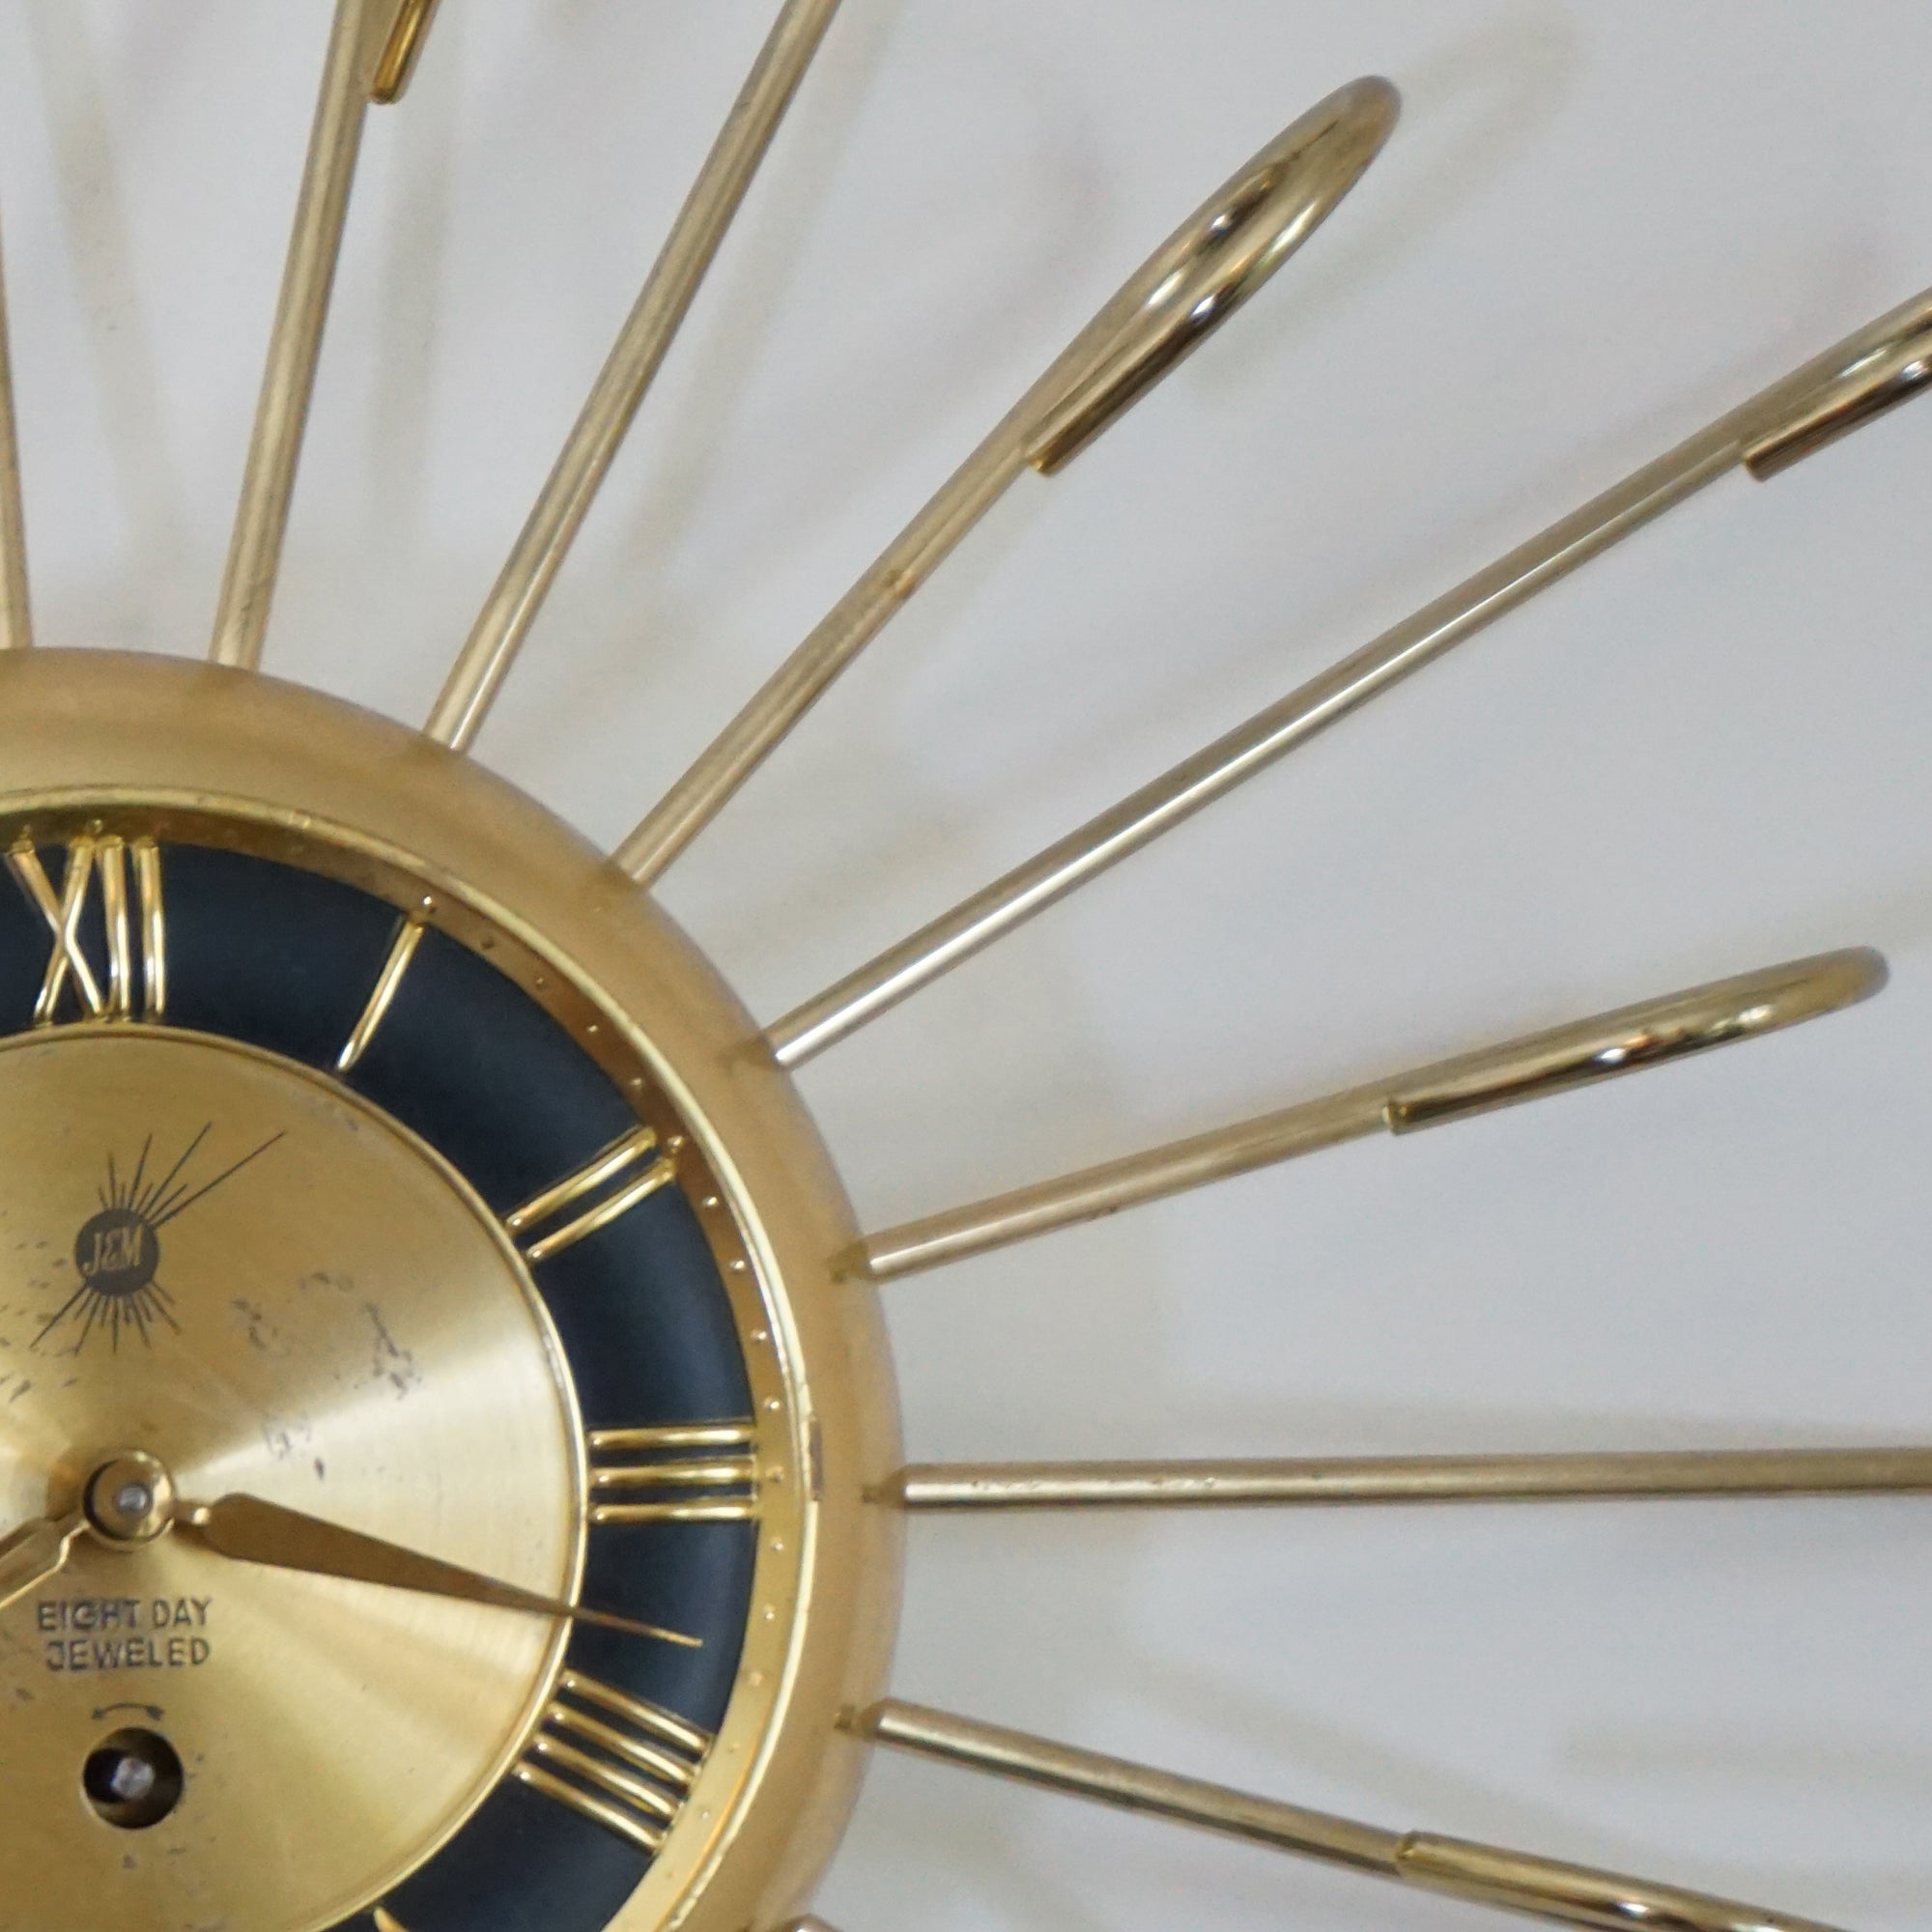 Starburst Clock, Mid Century Wall Clock, Retro Atomic Design, Handmade From  Recycled Guitar Wood by Blackwell Woodworks — Blackwell Woodworks